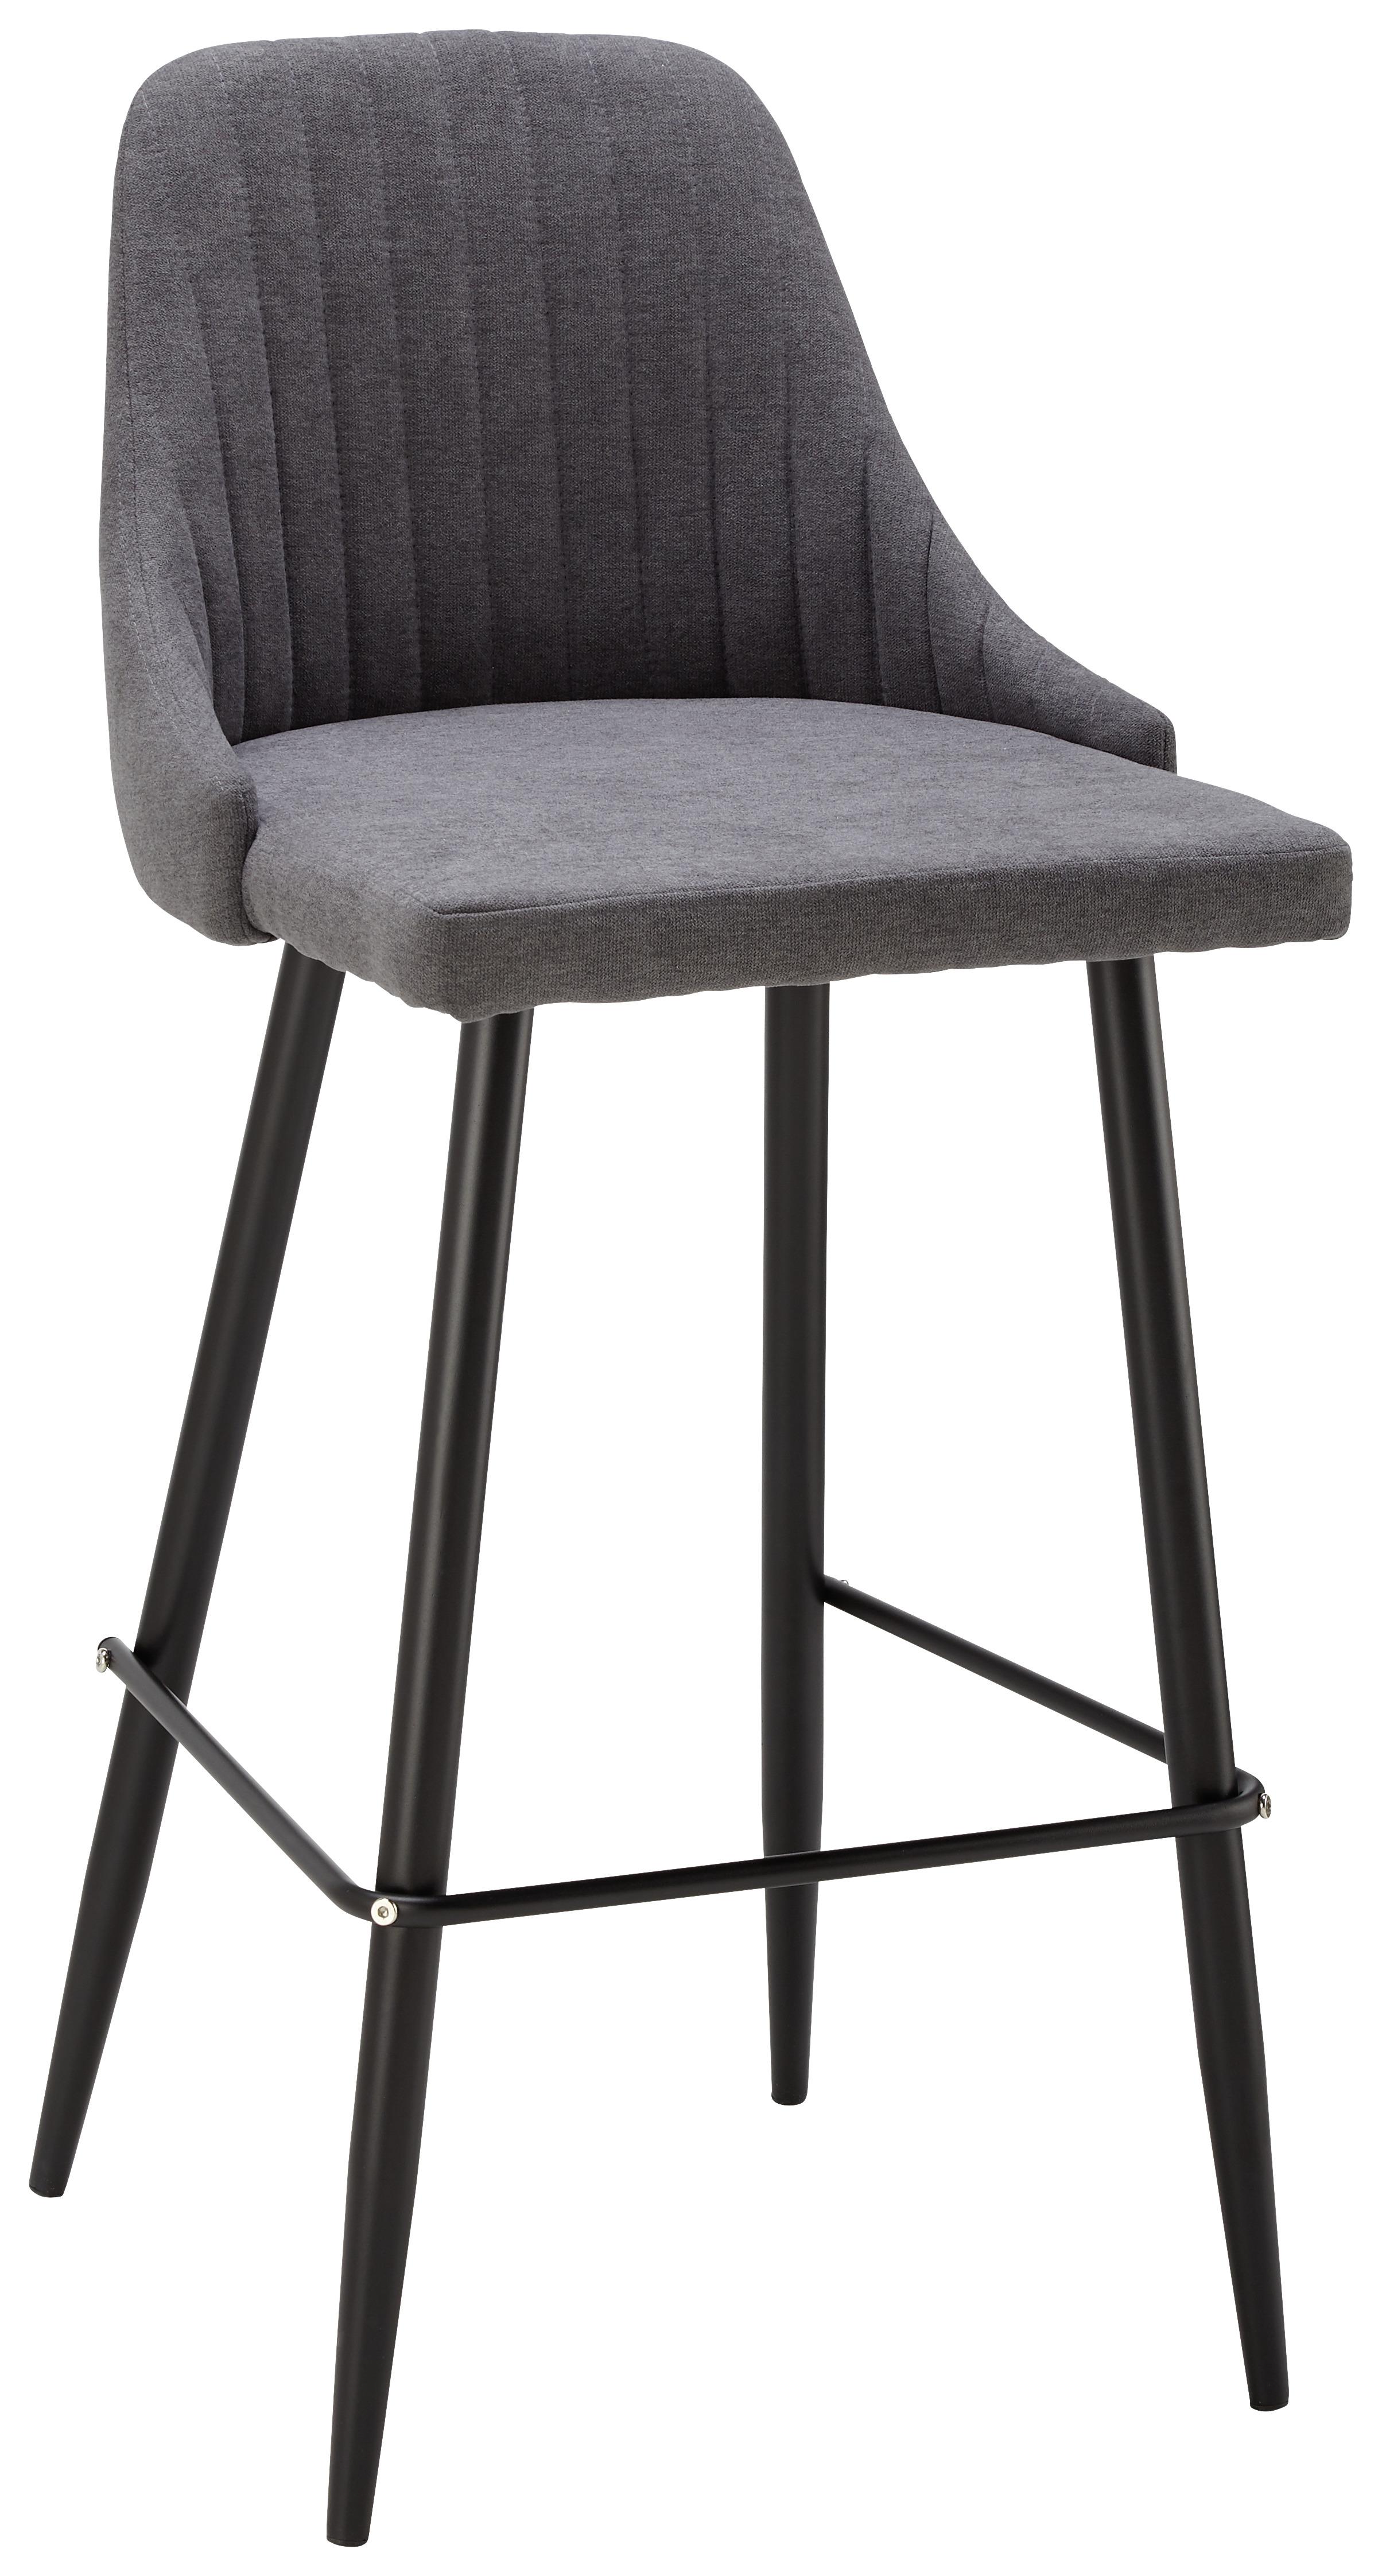 Barová Židle Seko - černá/tmavě šedá, Moderní, kov/dřevo (50/105/55cm) - Modern Living